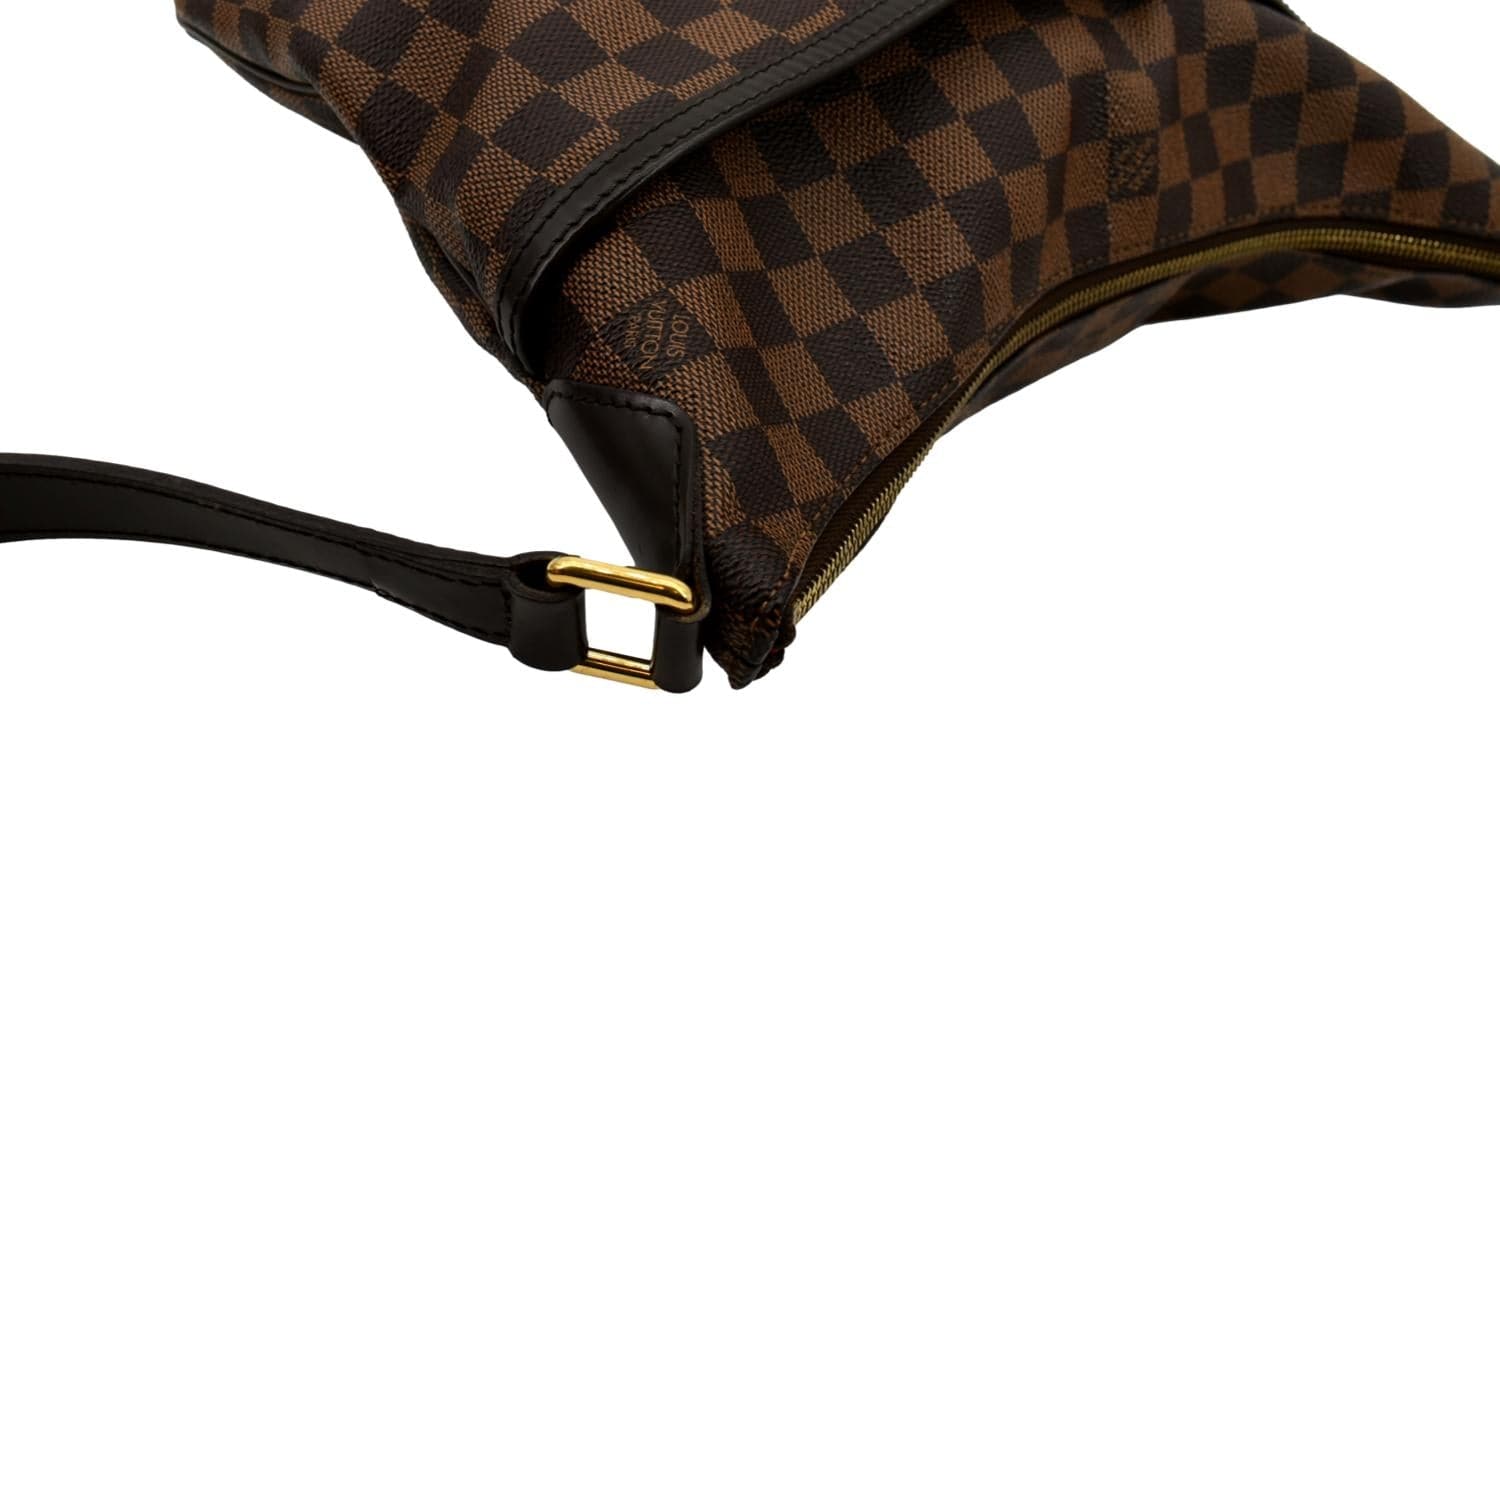 Louis Vuitton 2010 pre-owned Bloomsbury GM shoulder bag